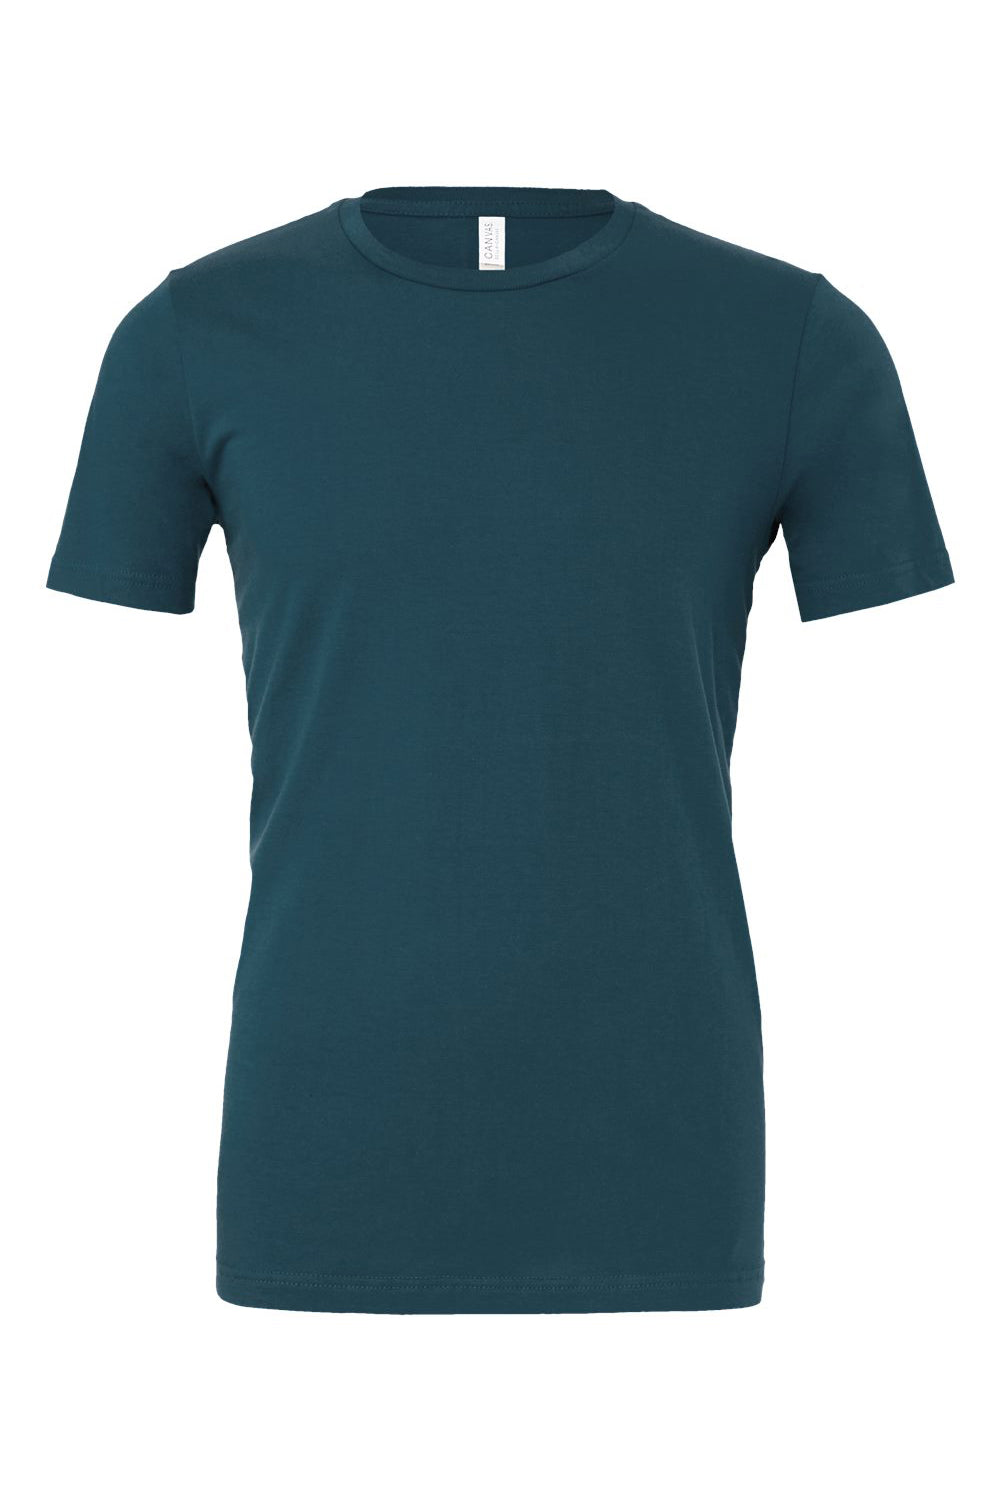 Bella + Canvas BC3001/3001C Mens Jersey Short Sleeve Crewneck T-Shirt Deep Teal Blue Flat Front